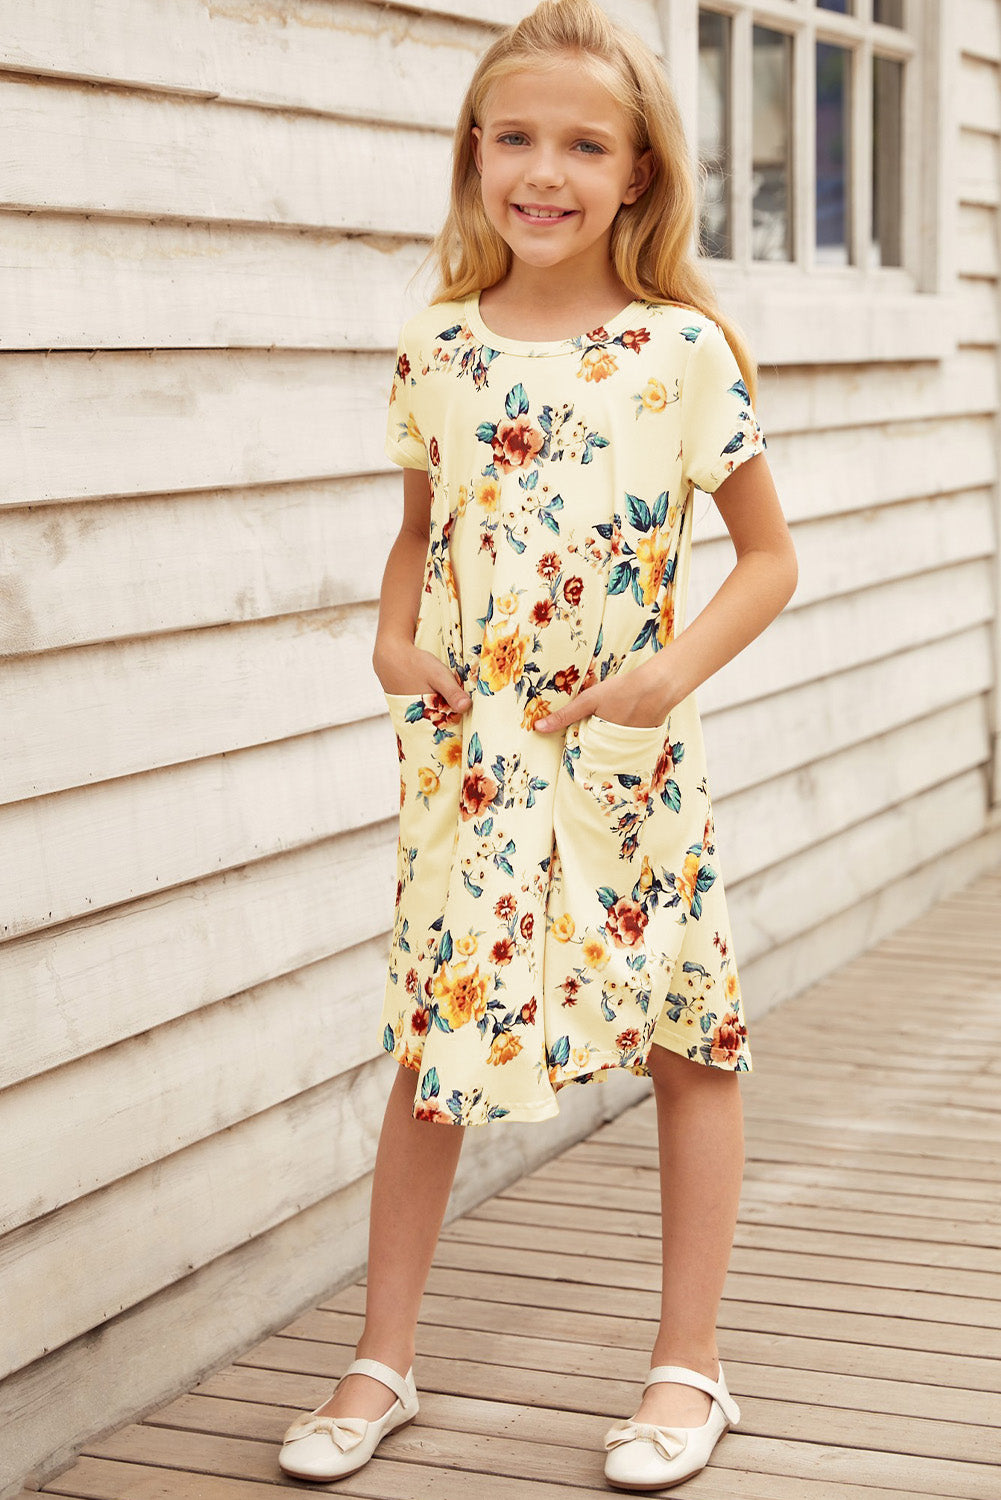 Girls Floral Round Neck Short Sleeve Dress with Pockets - DromedarShop.com Online Boutique